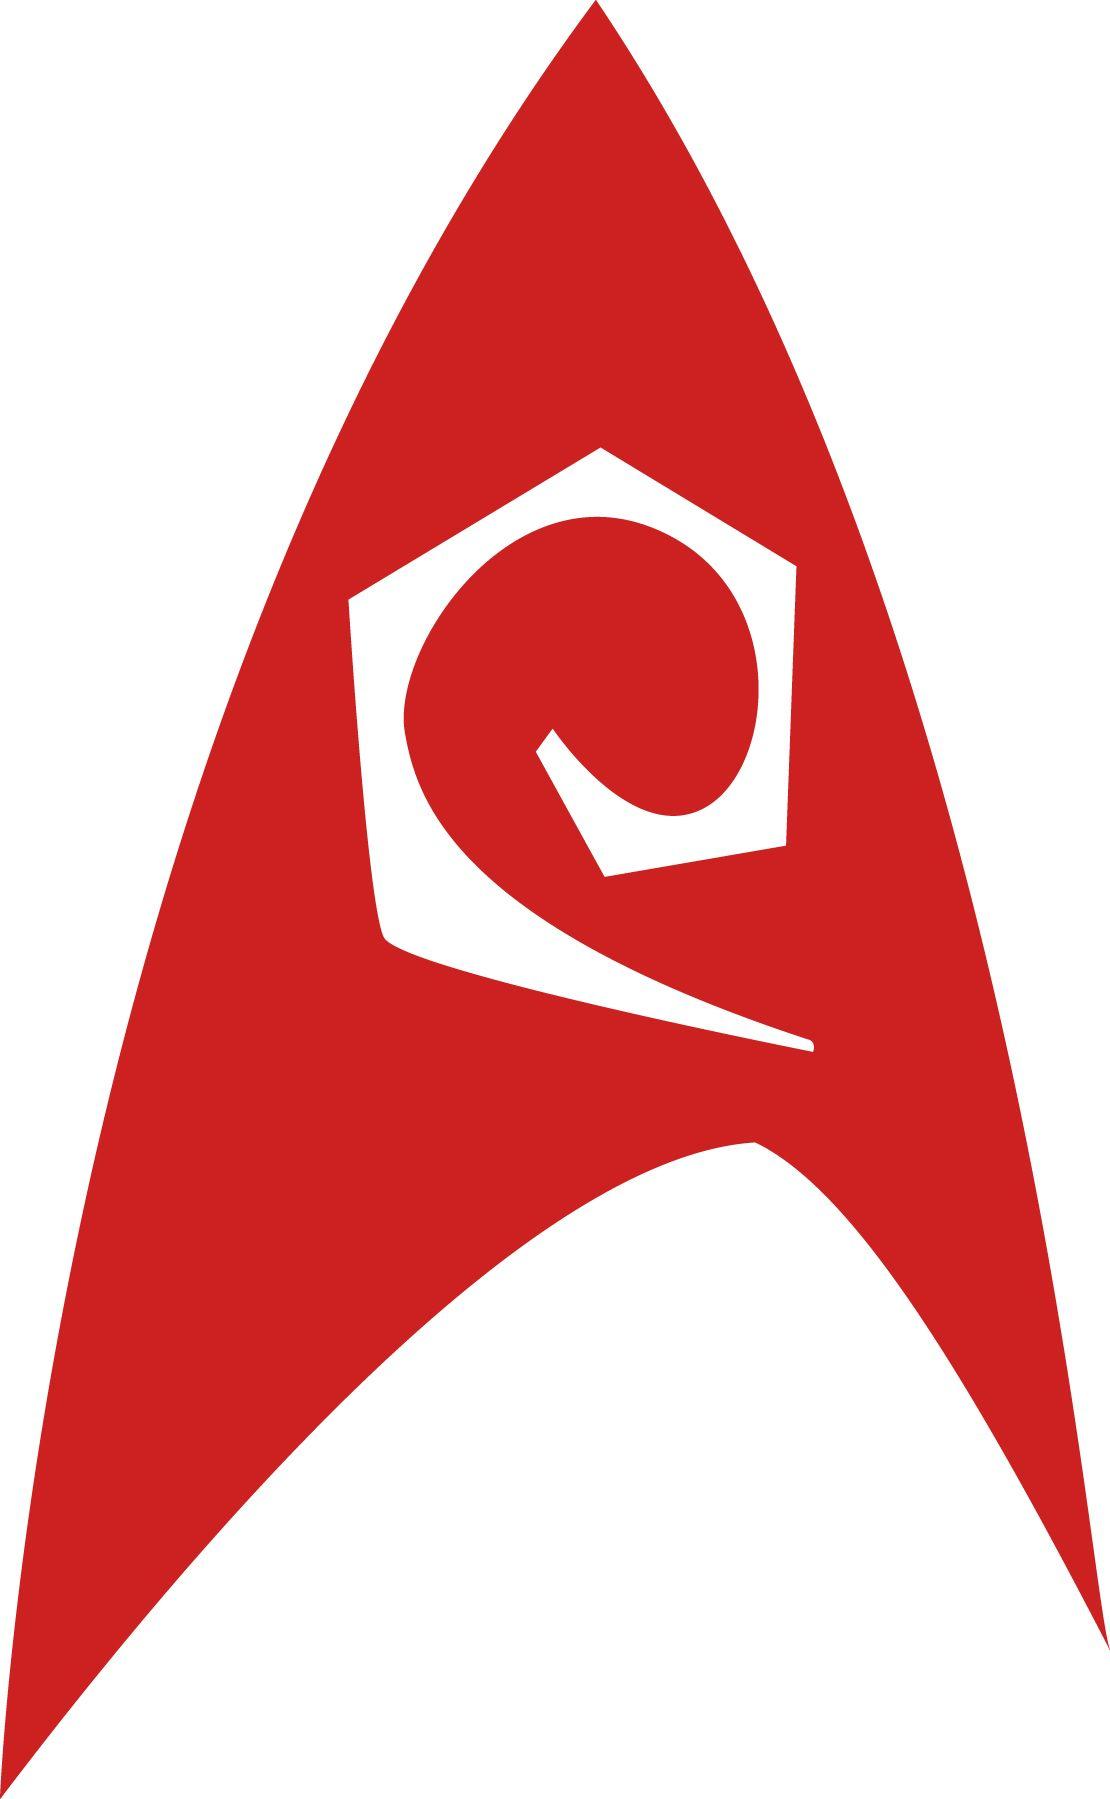 Red Star Trek Logo - StarTrekkie.com :: Star Trek Insignias